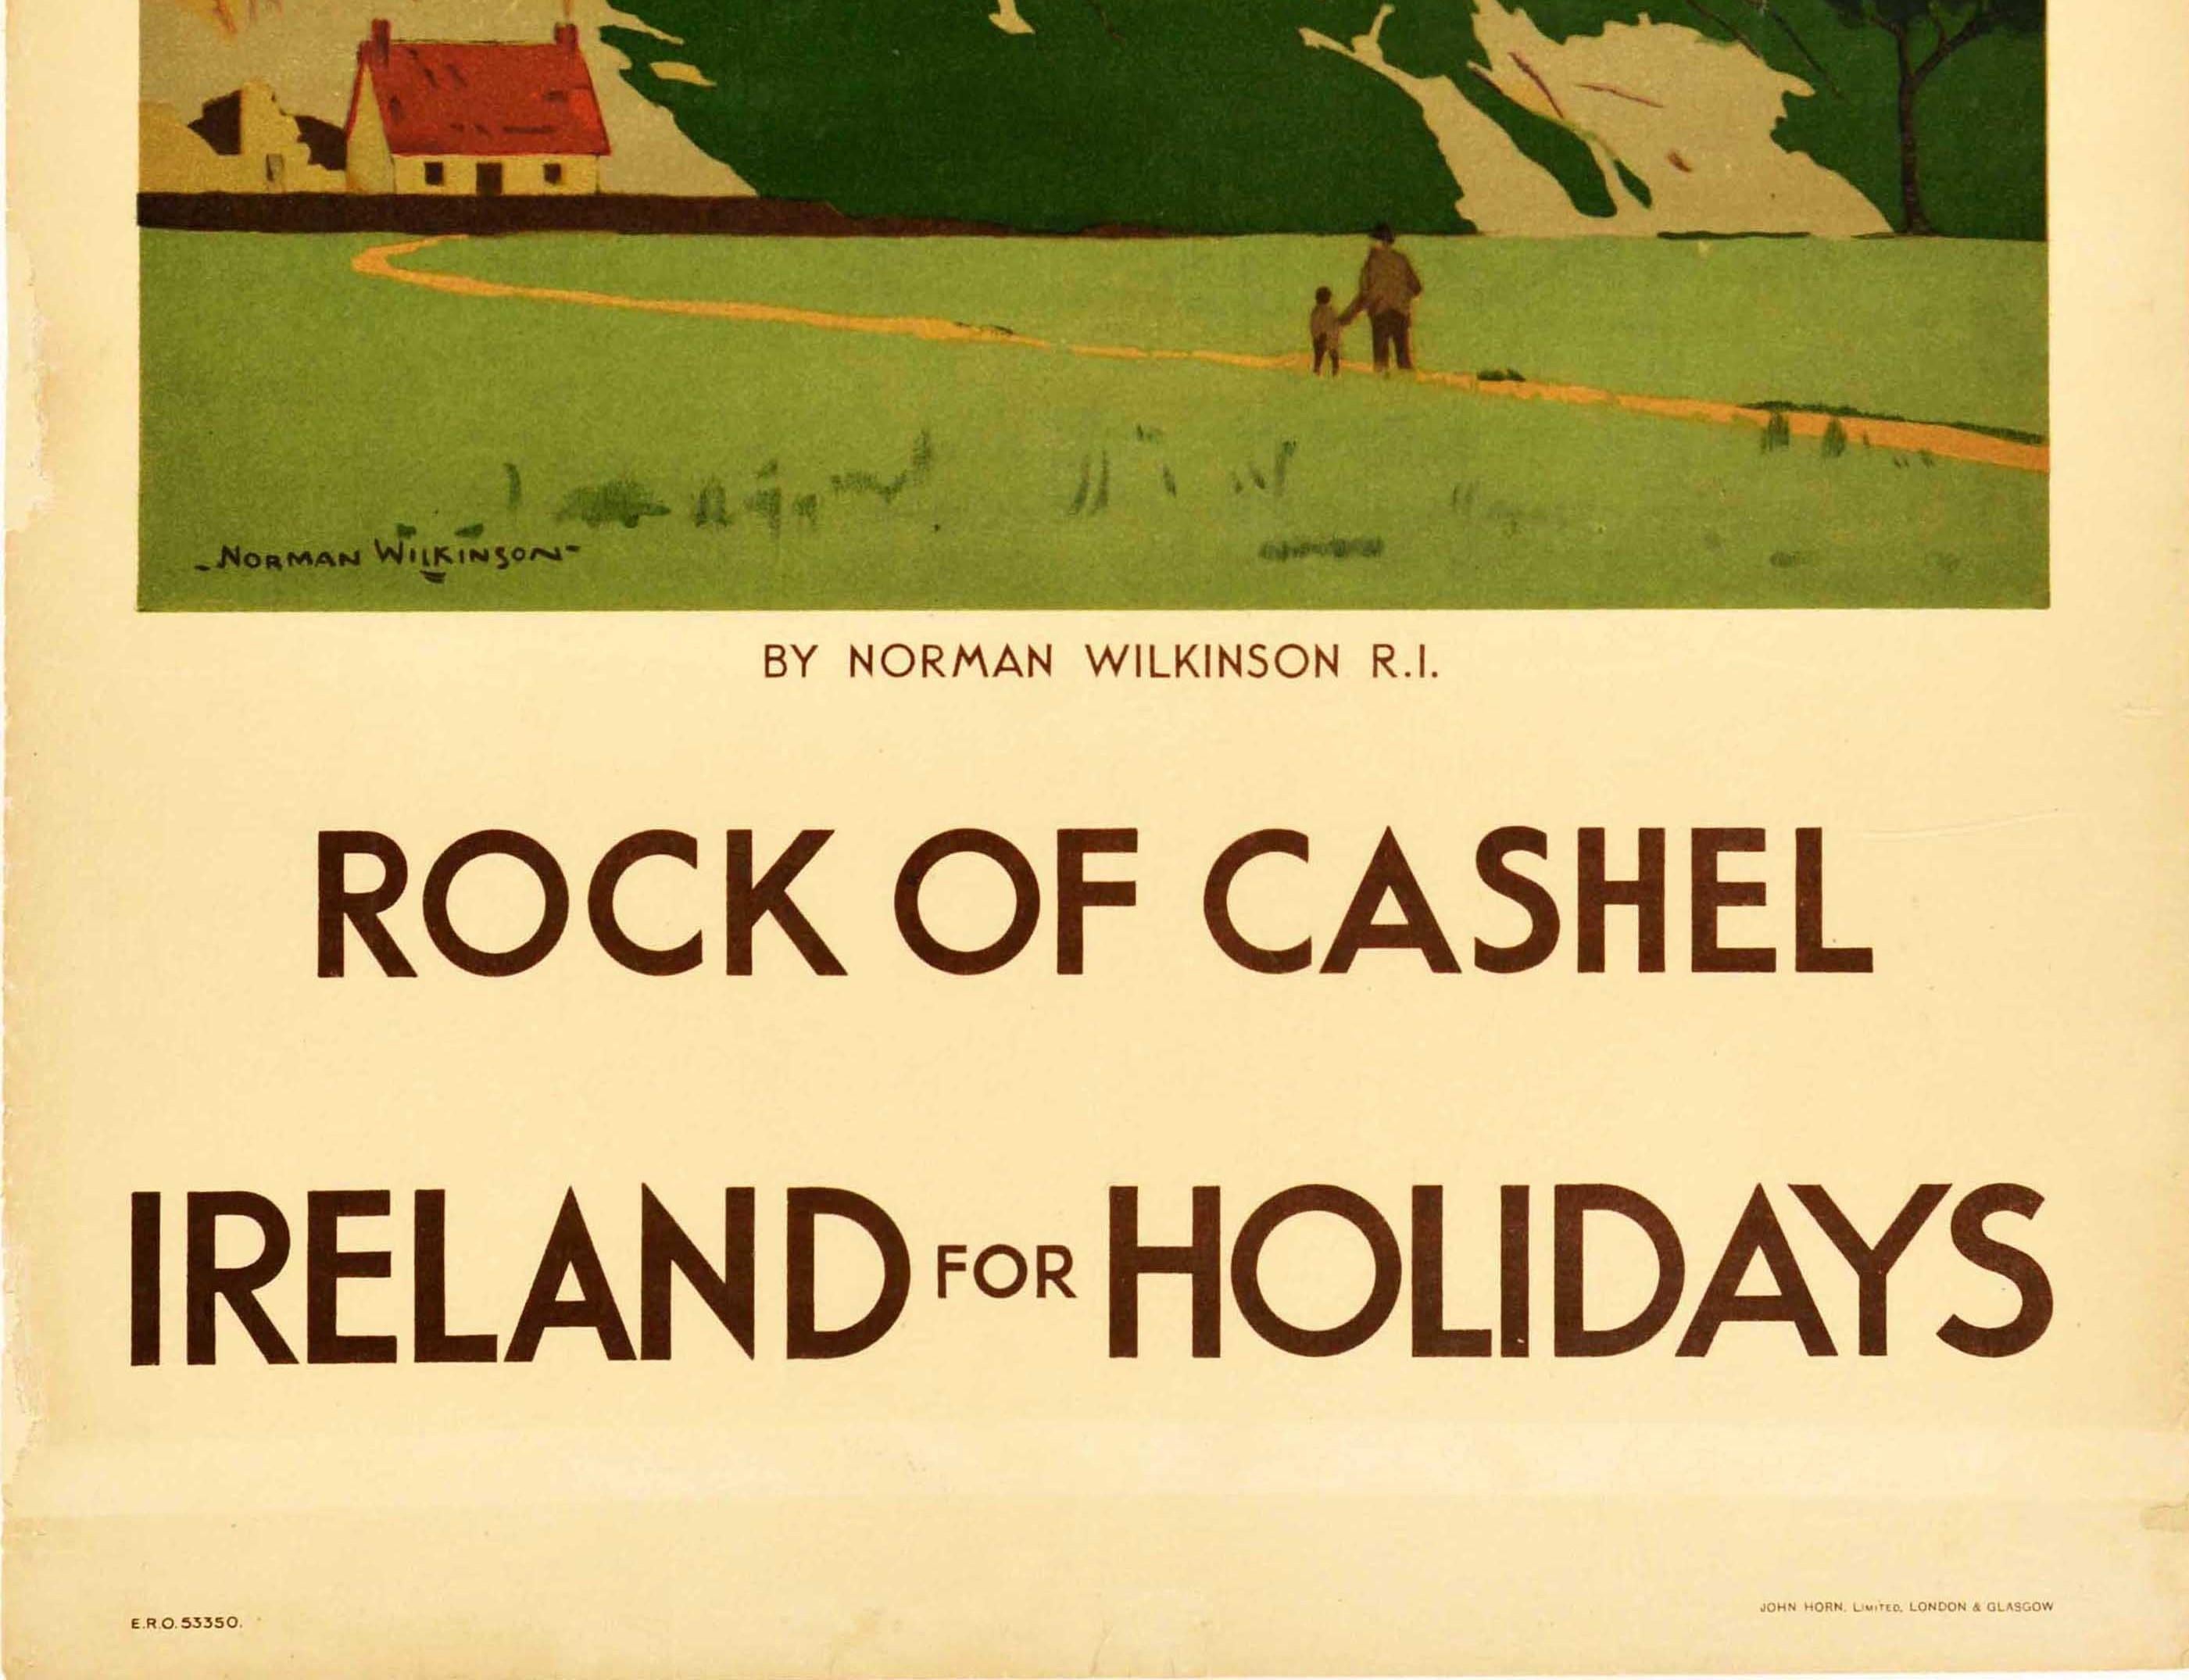 British Original Vintage LMS Railway Travel Poster Rock Of Cashel Ireland For Holidays